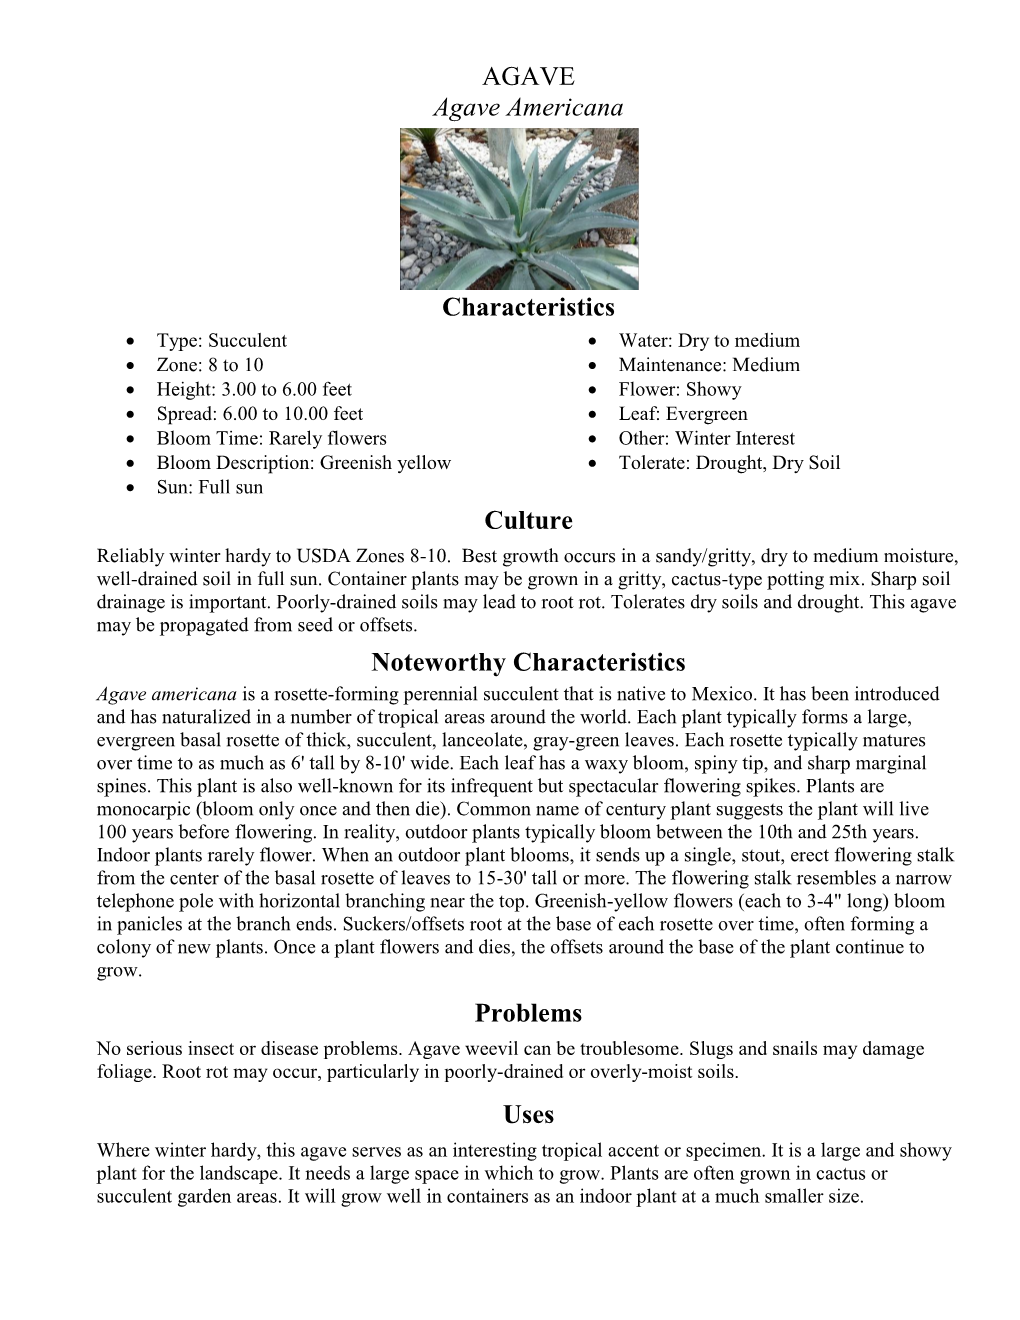 AGAVE Agave Americana Characteristics Culture Noteworthy